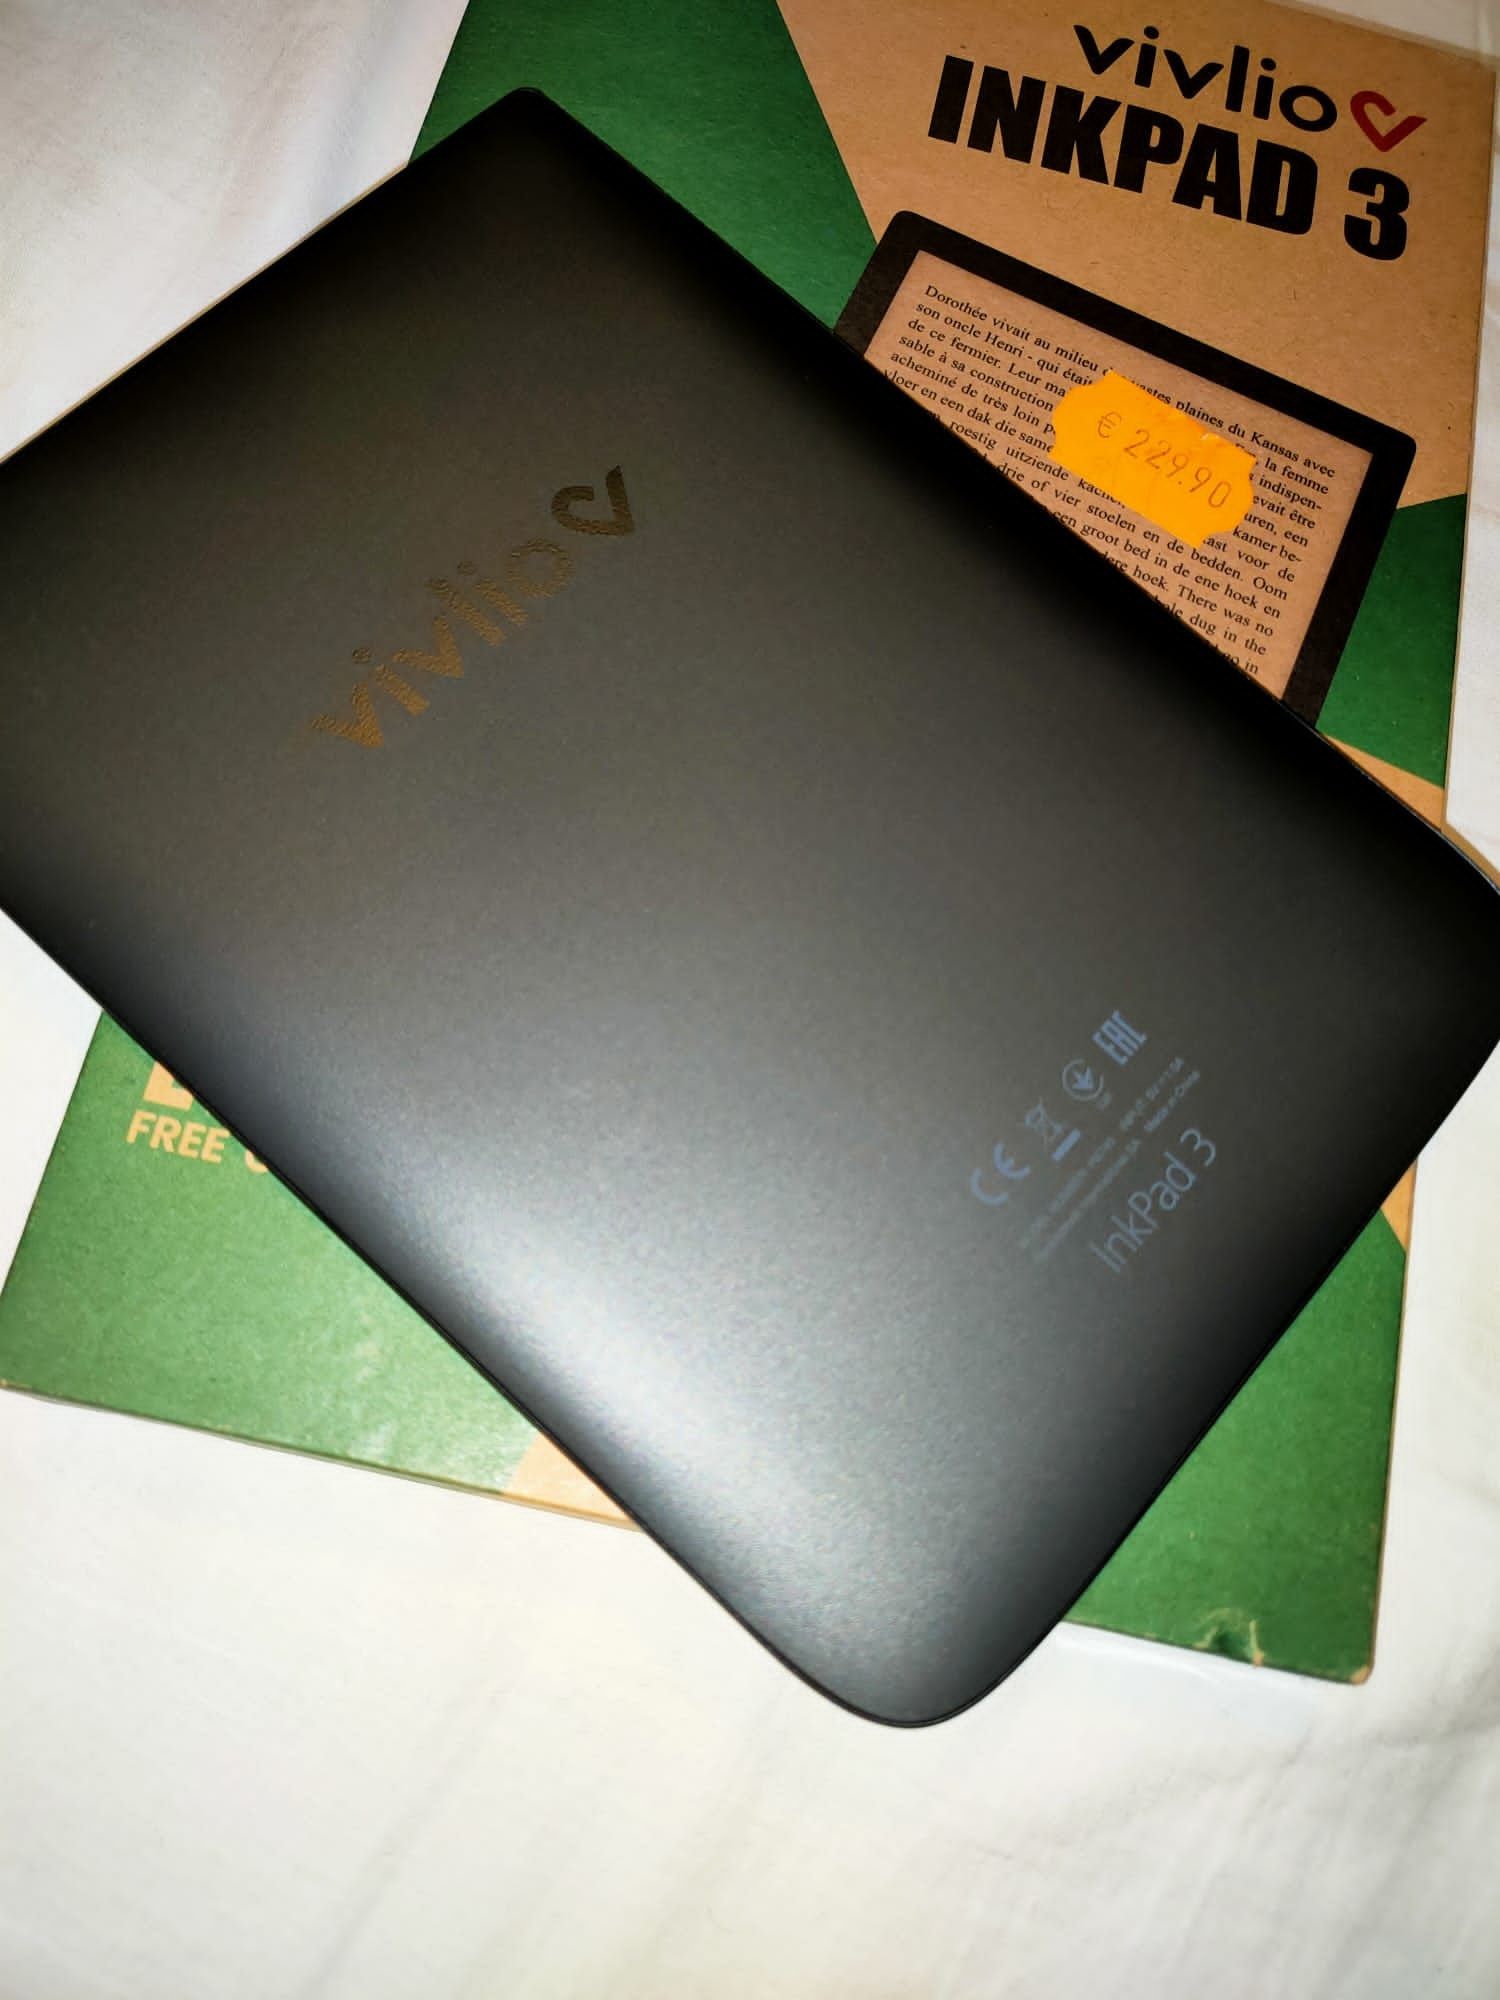 Ebook reader Pocketbook Vivlio, InkPad 3,